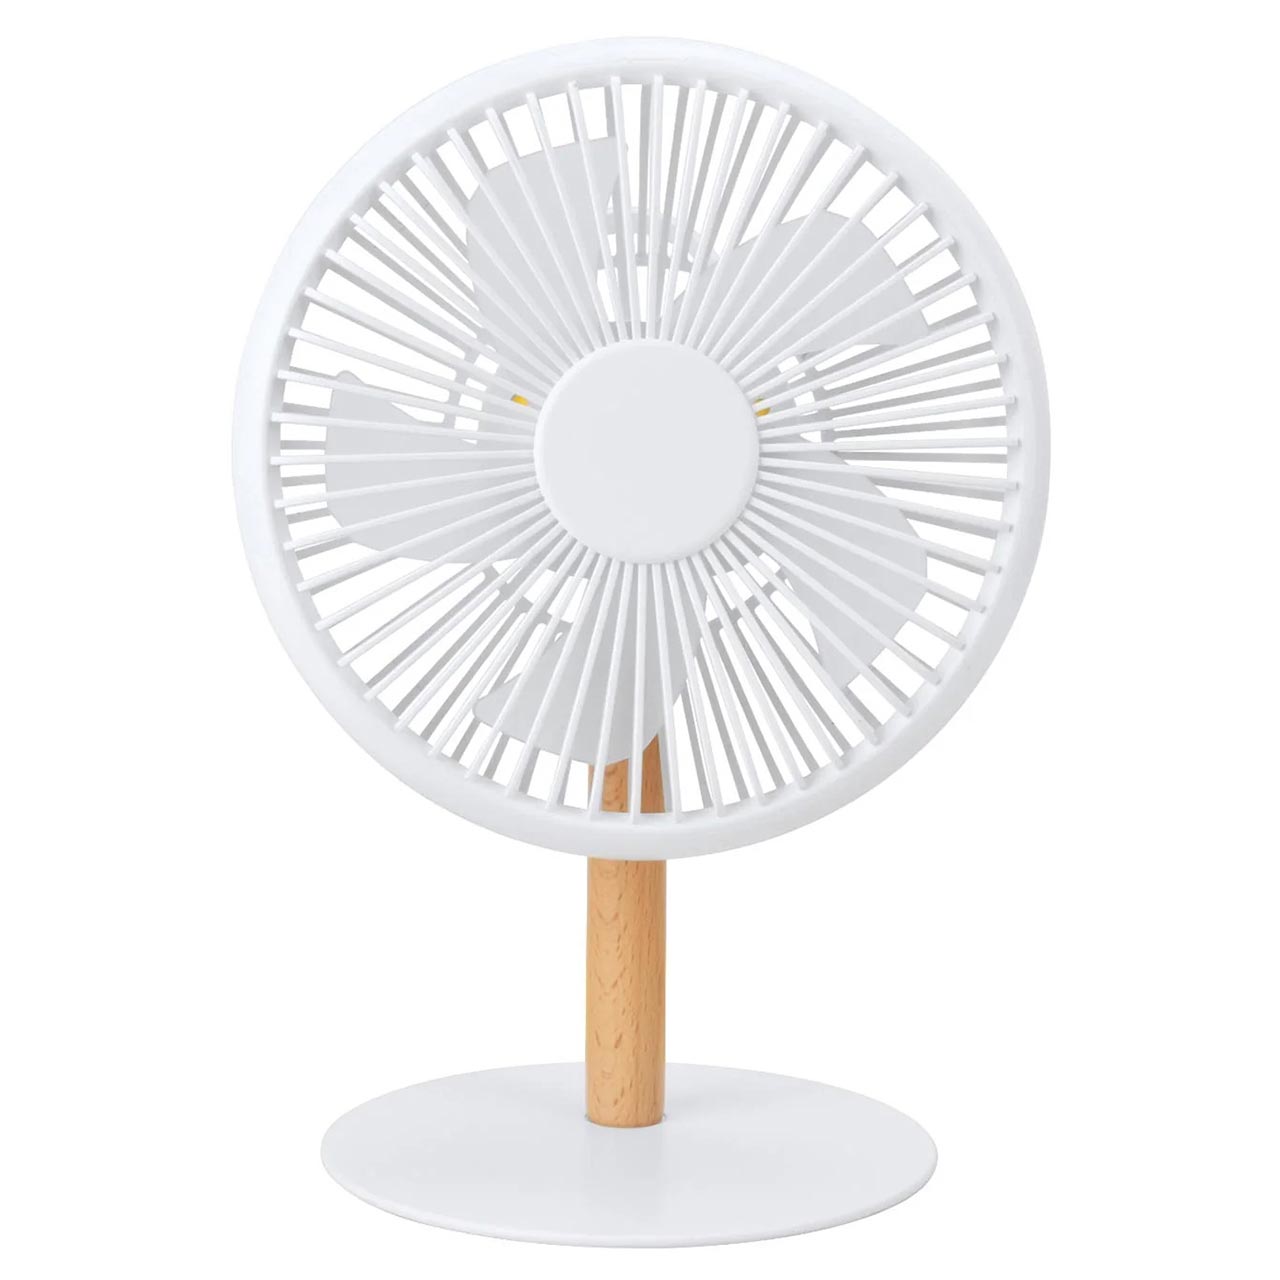 GINGKO BEYOND Portable/Detachable Desk Fan/Light Cream White | the design gift shop